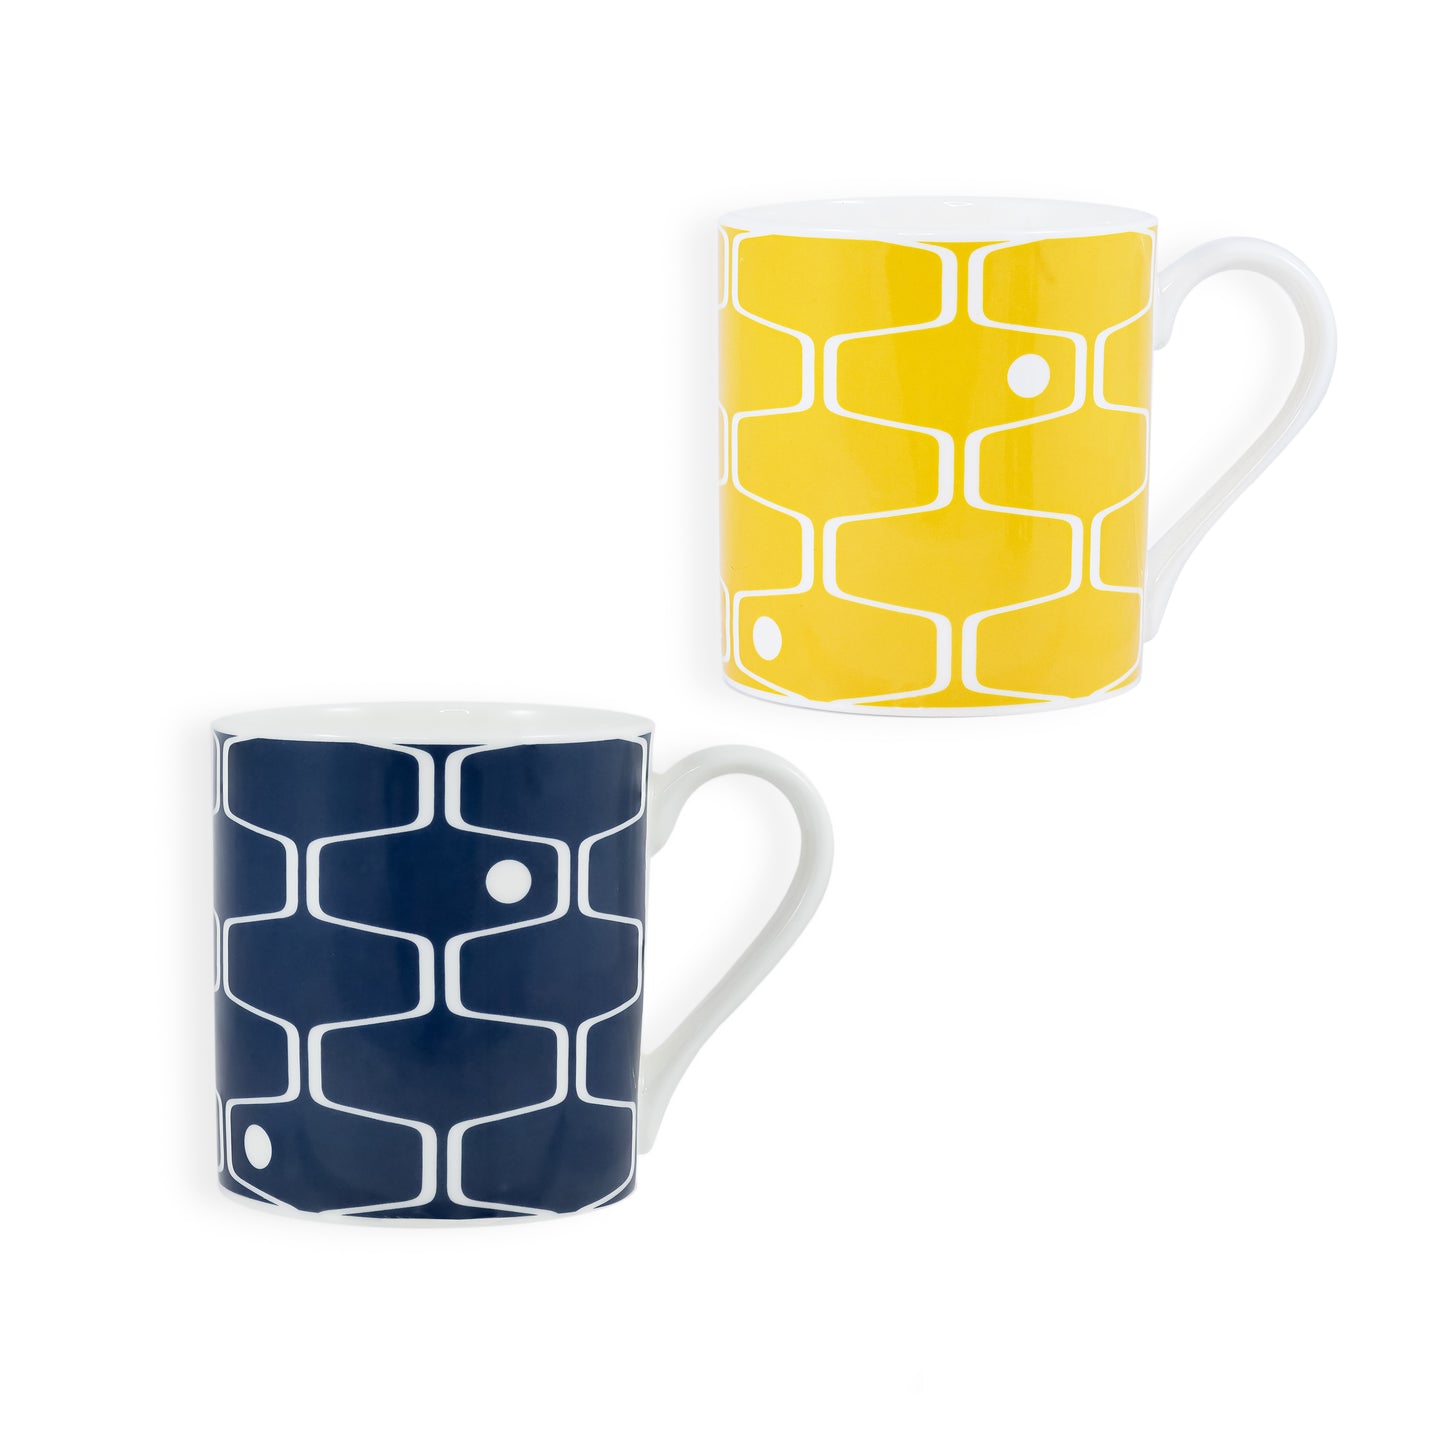 Two mugs featuring the net & ball pattern